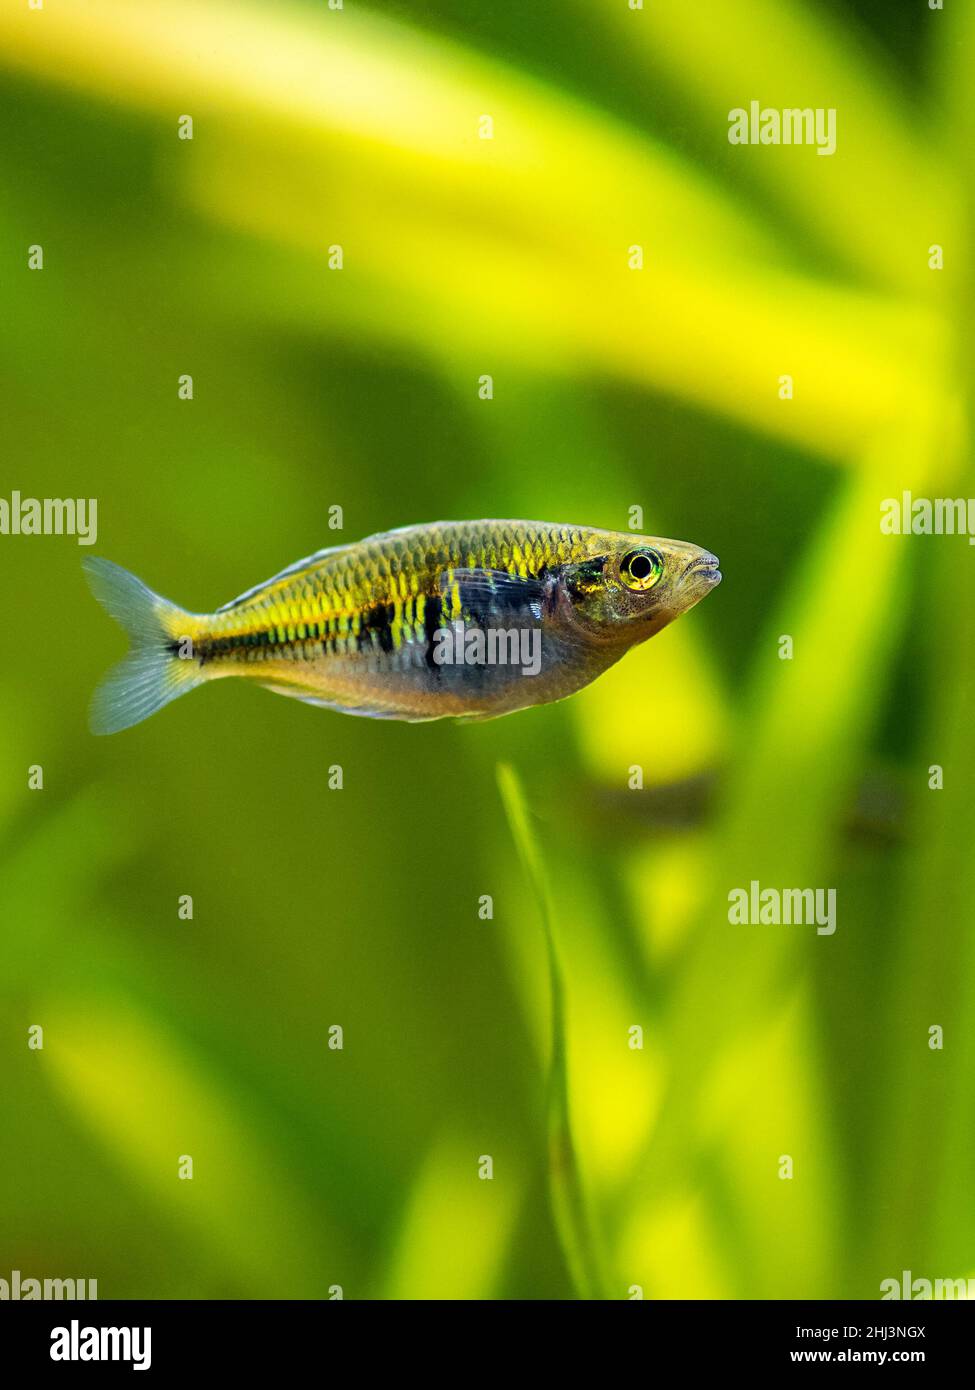 close up of a Boeseman's rainbowfish (Melanotaenia boesemani) isolated on a fish tank with blurred background Stock Photo